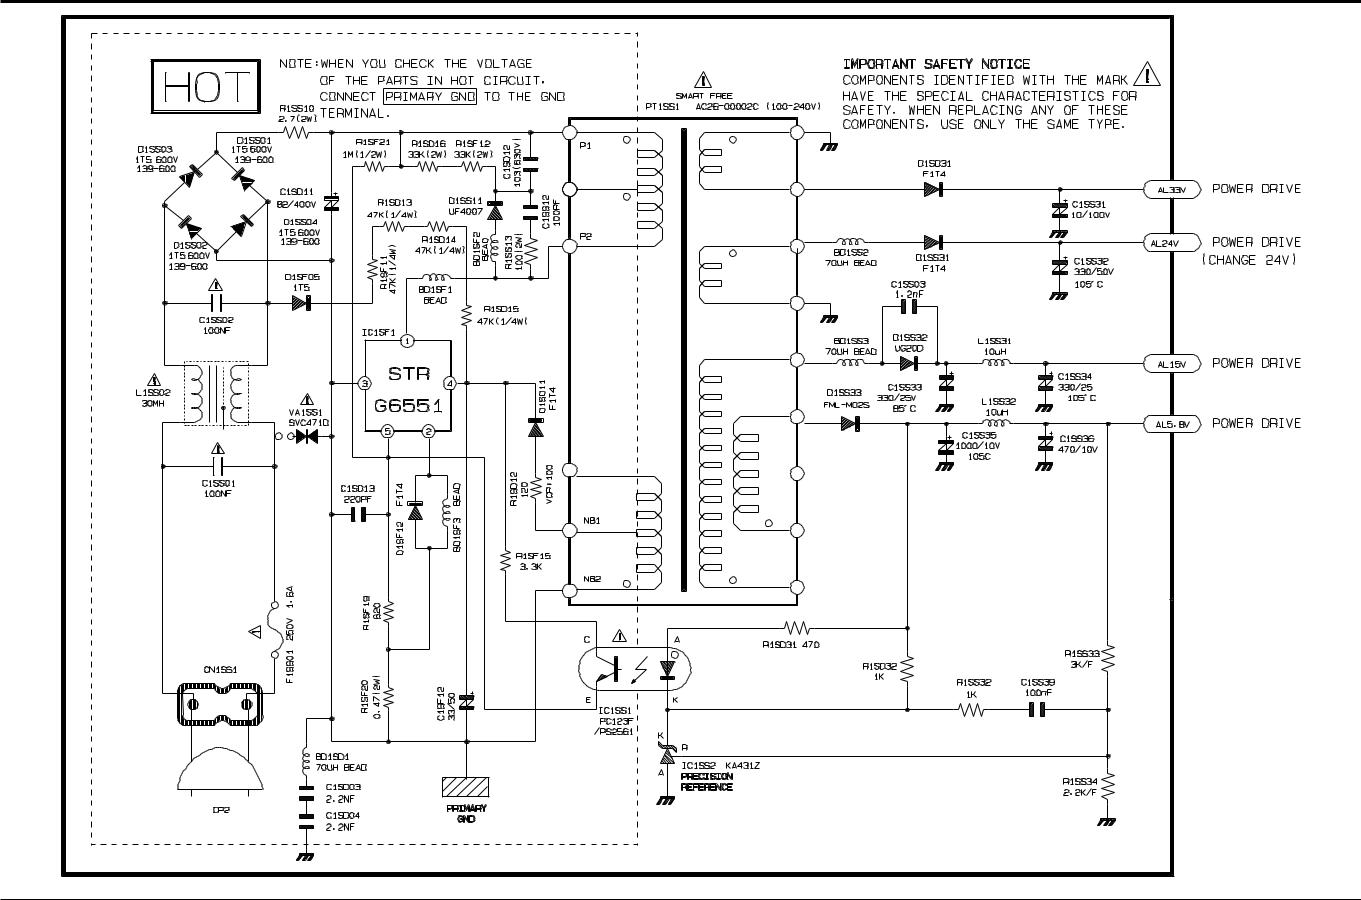 Samsung SVR-141, SVR-240W, SVR-243, SVR-2401, SVR-440 Schematics Diagram